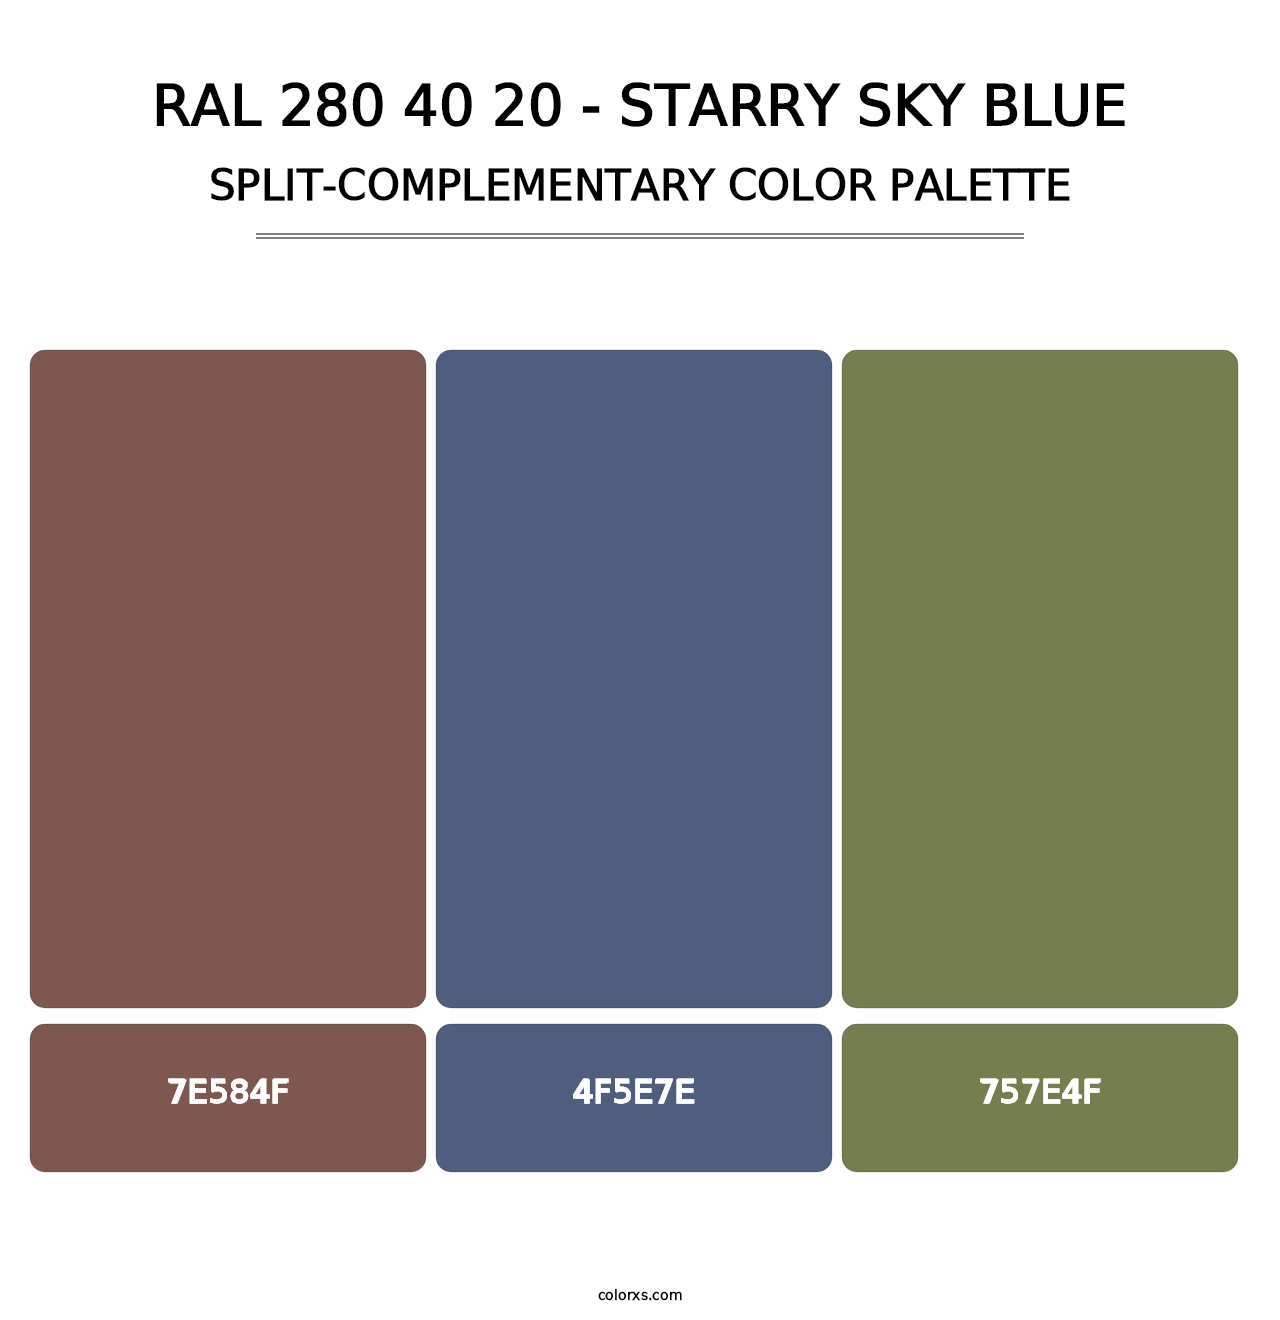 RAL 280 40 20 - Starry Sky Blue - Split-Complementary Color Palette